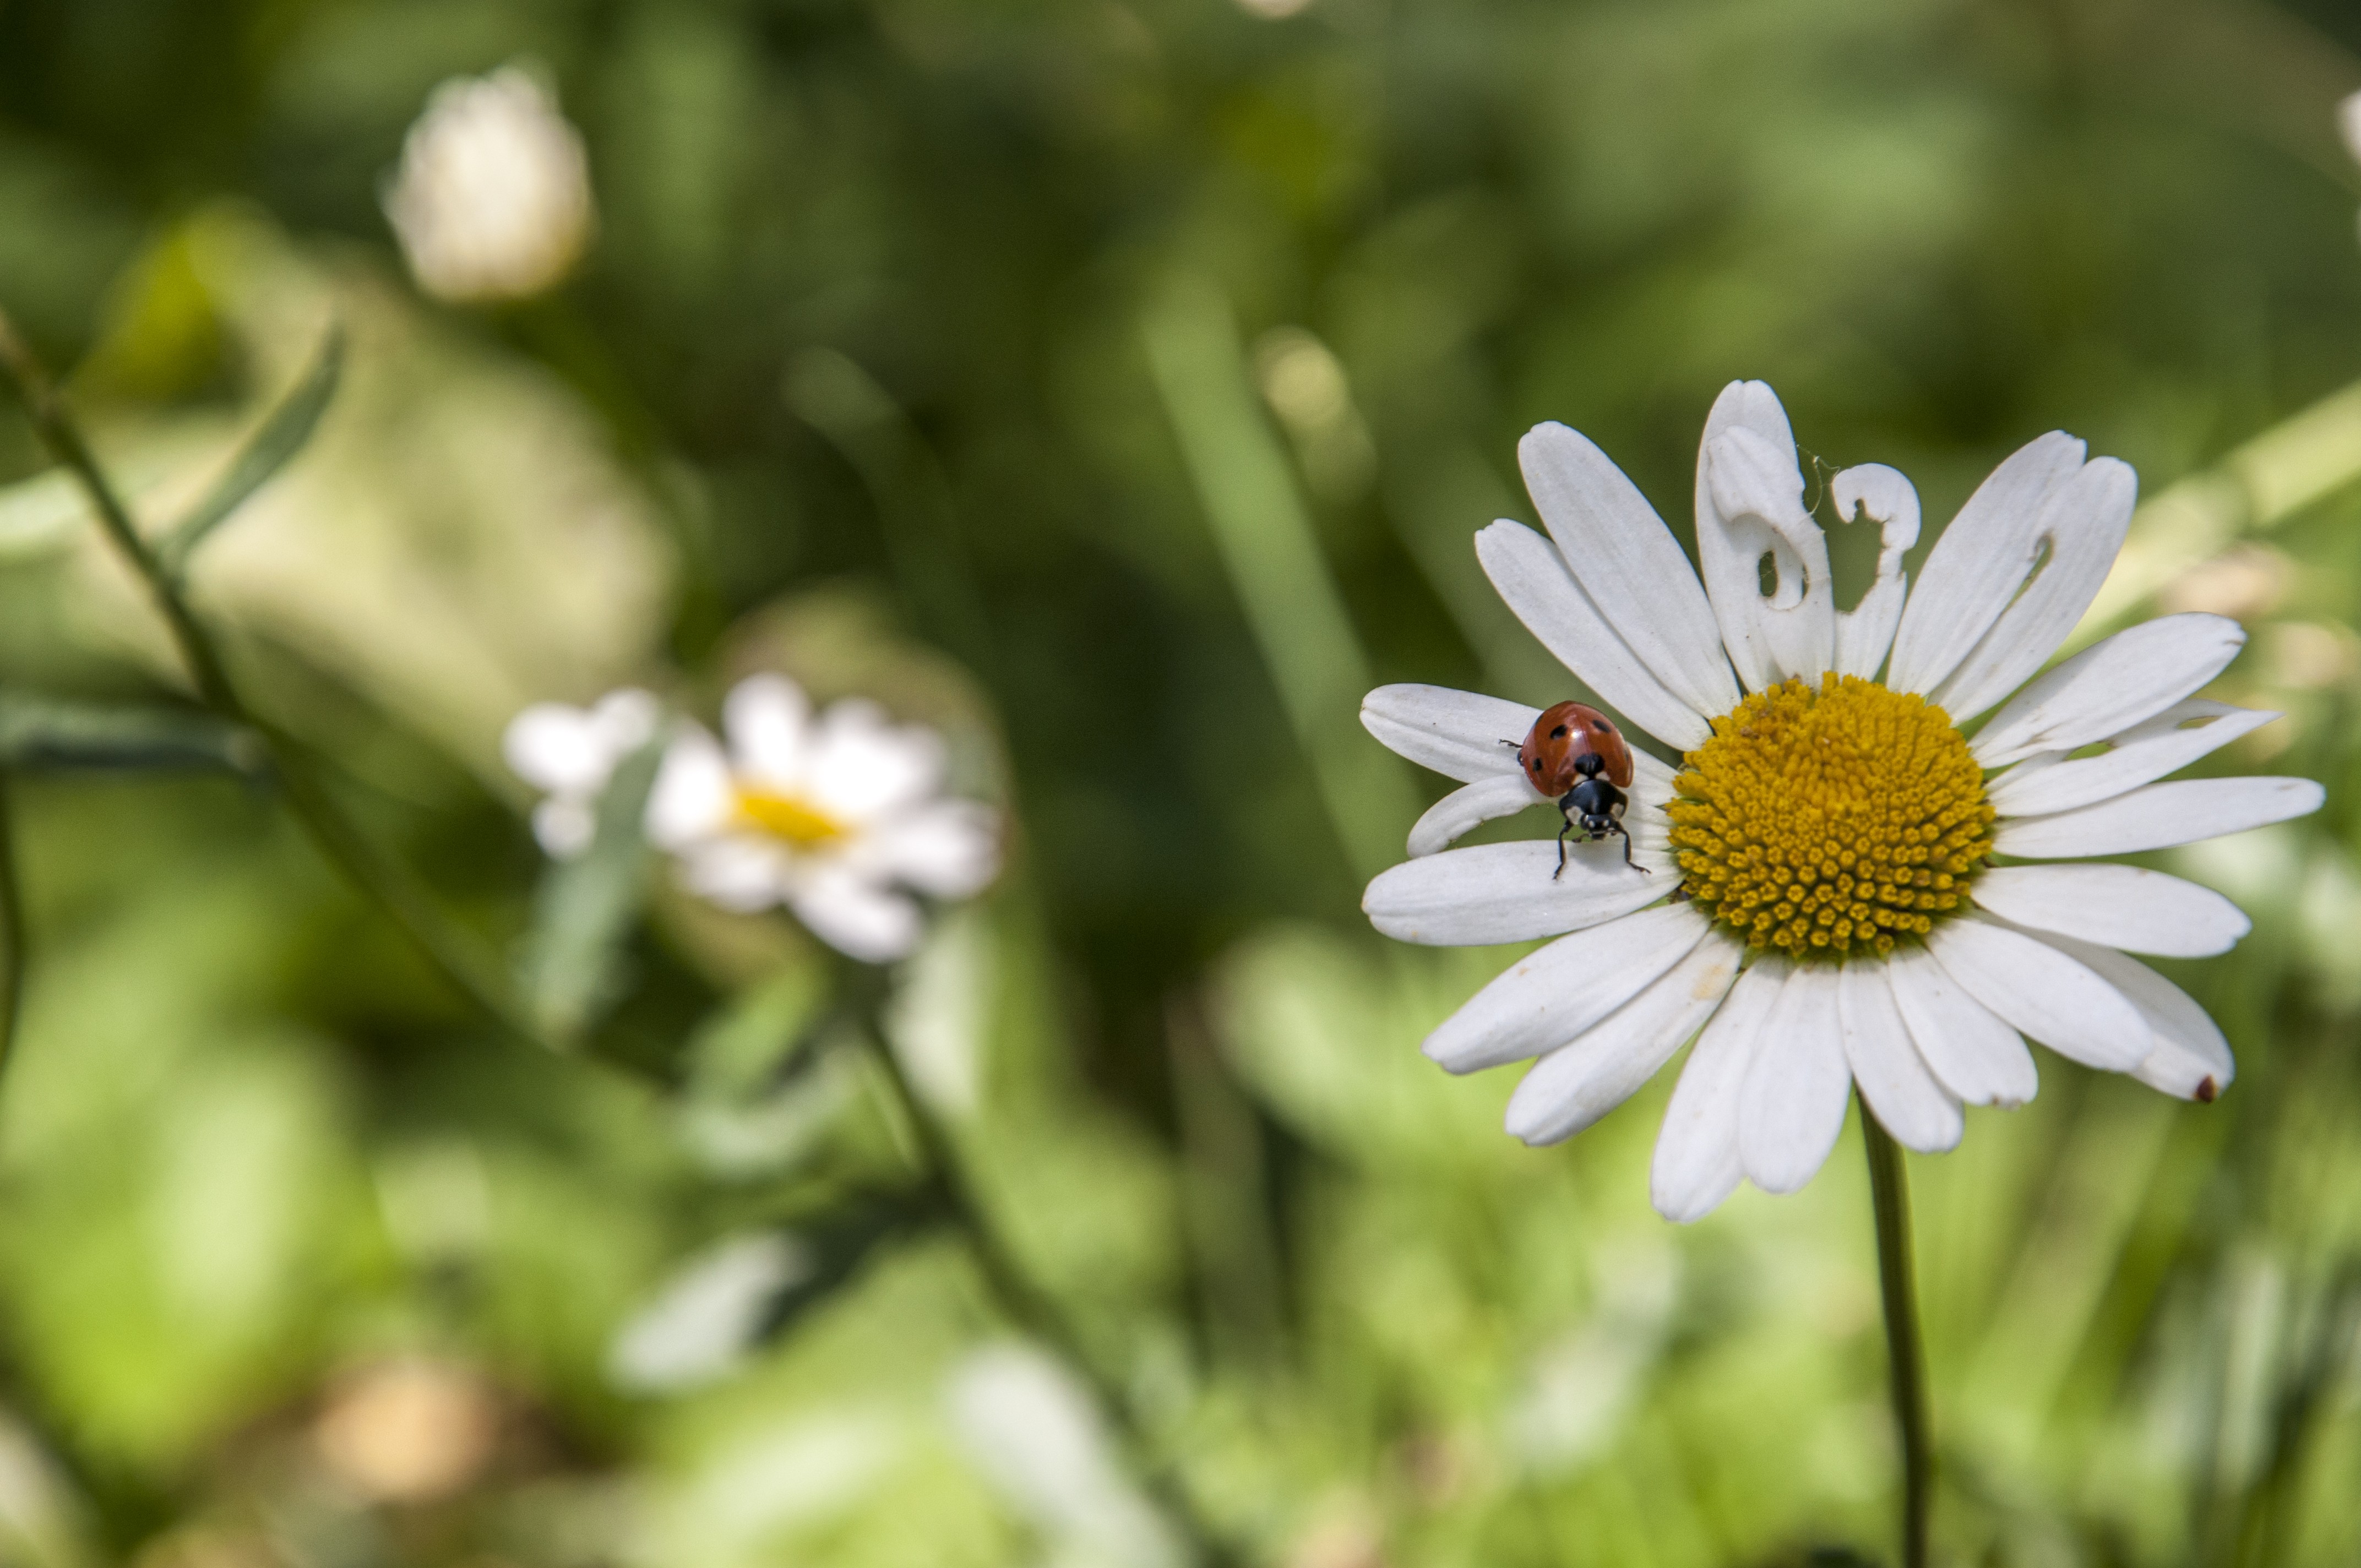 A ladybird on a white daisey flower